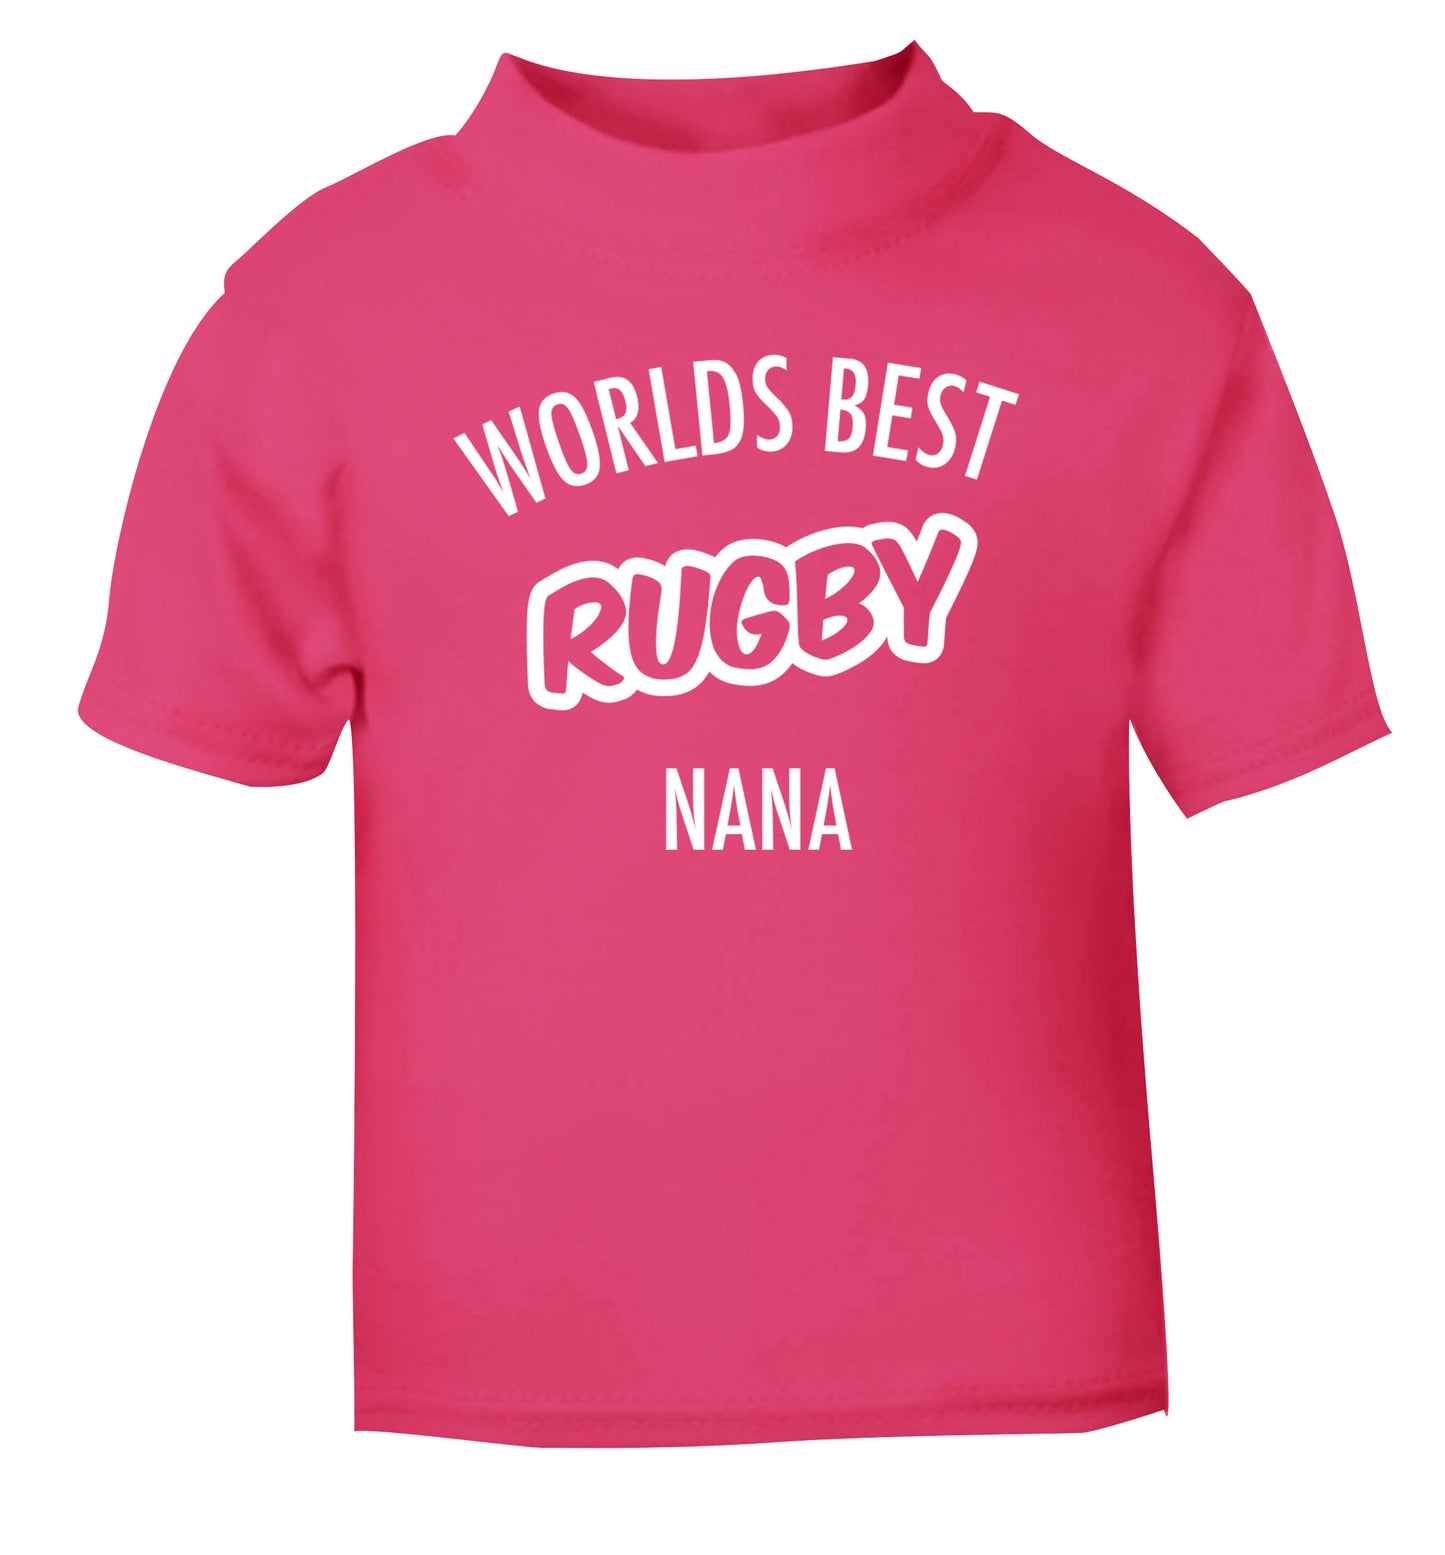 Worlds Best Rugby Grandma pink Baby Toddler Tshirt 2 Years